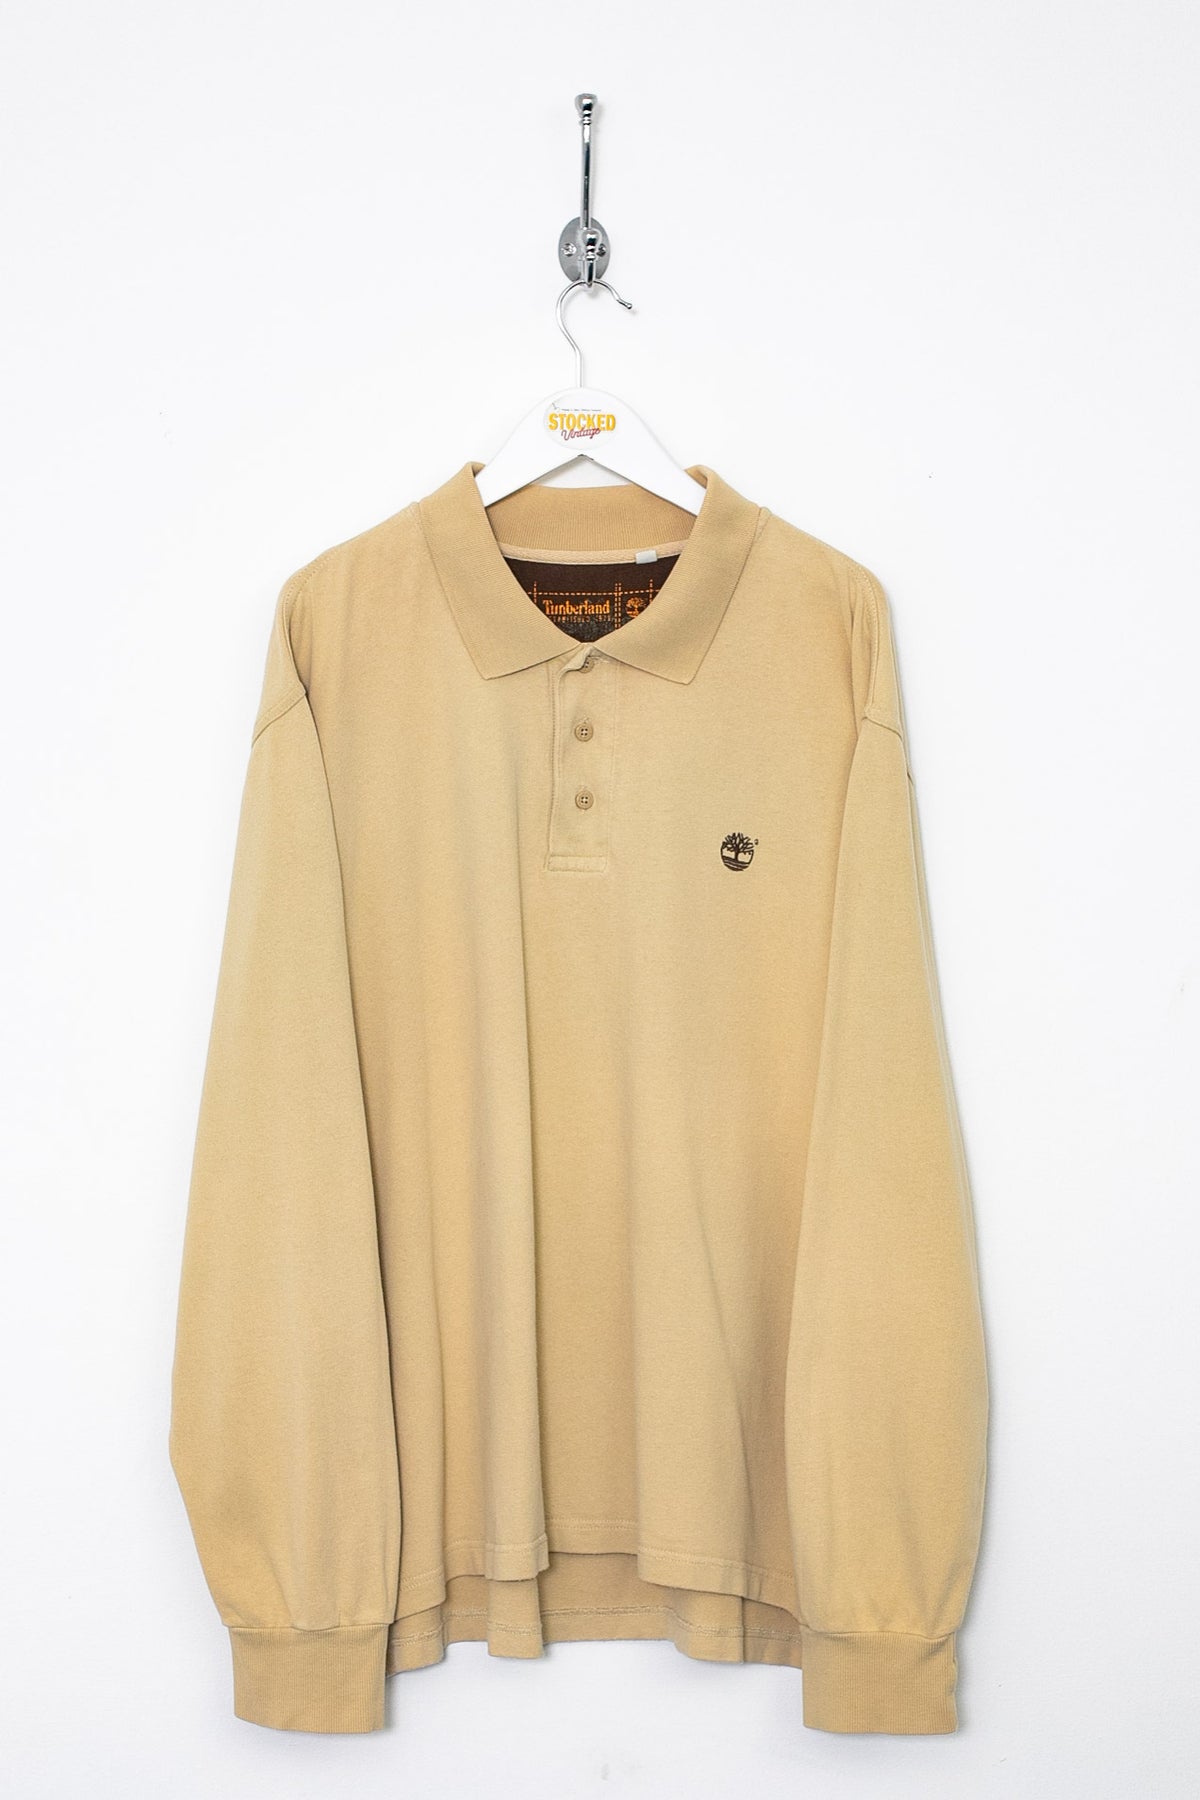 00s Timberland Long Sleeved Polo Shirt (XL)